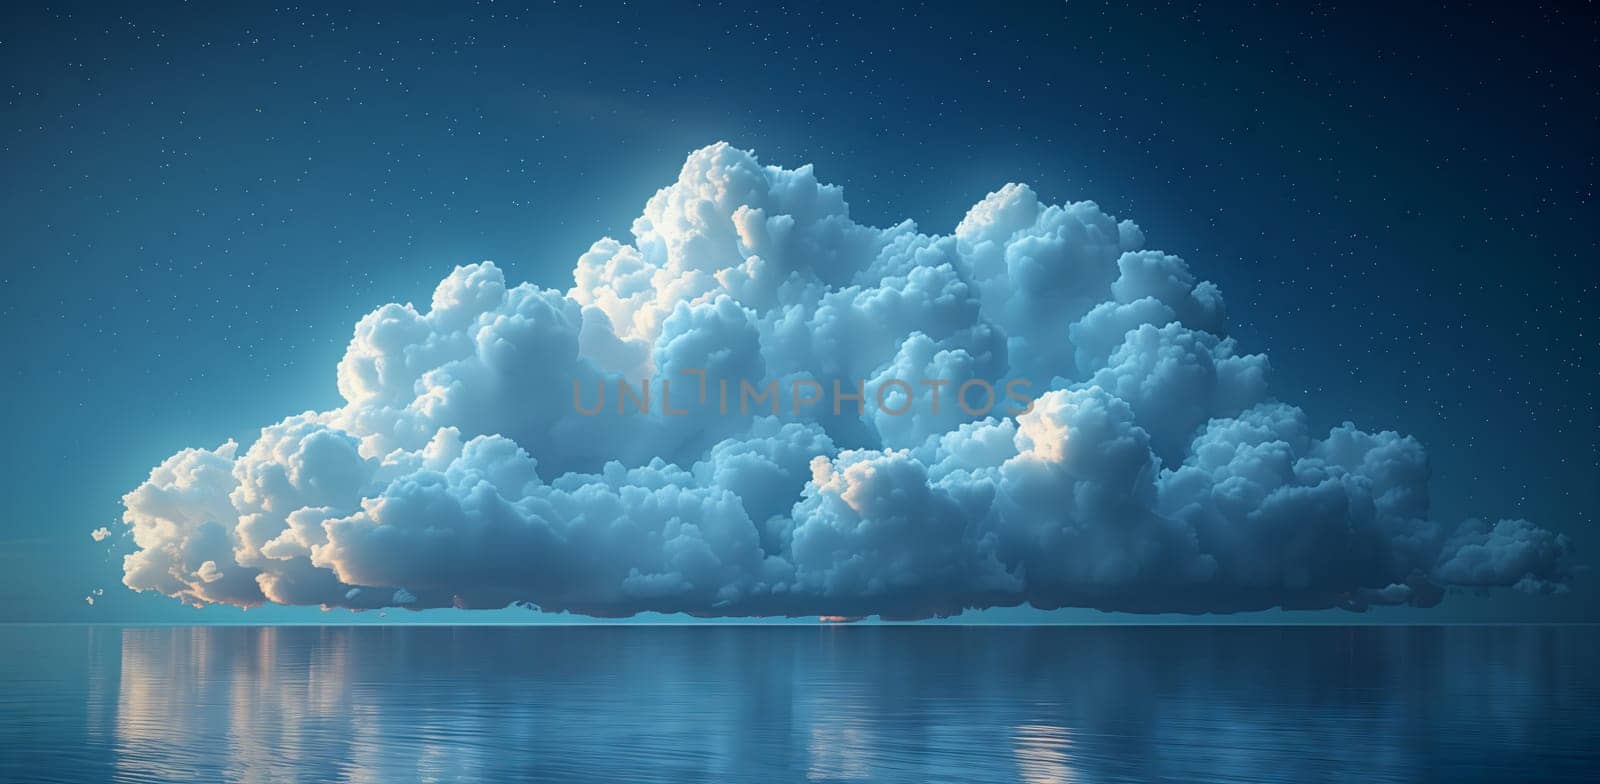 Cumulus cloud drifts above calm lake in natural landscape by richwolf